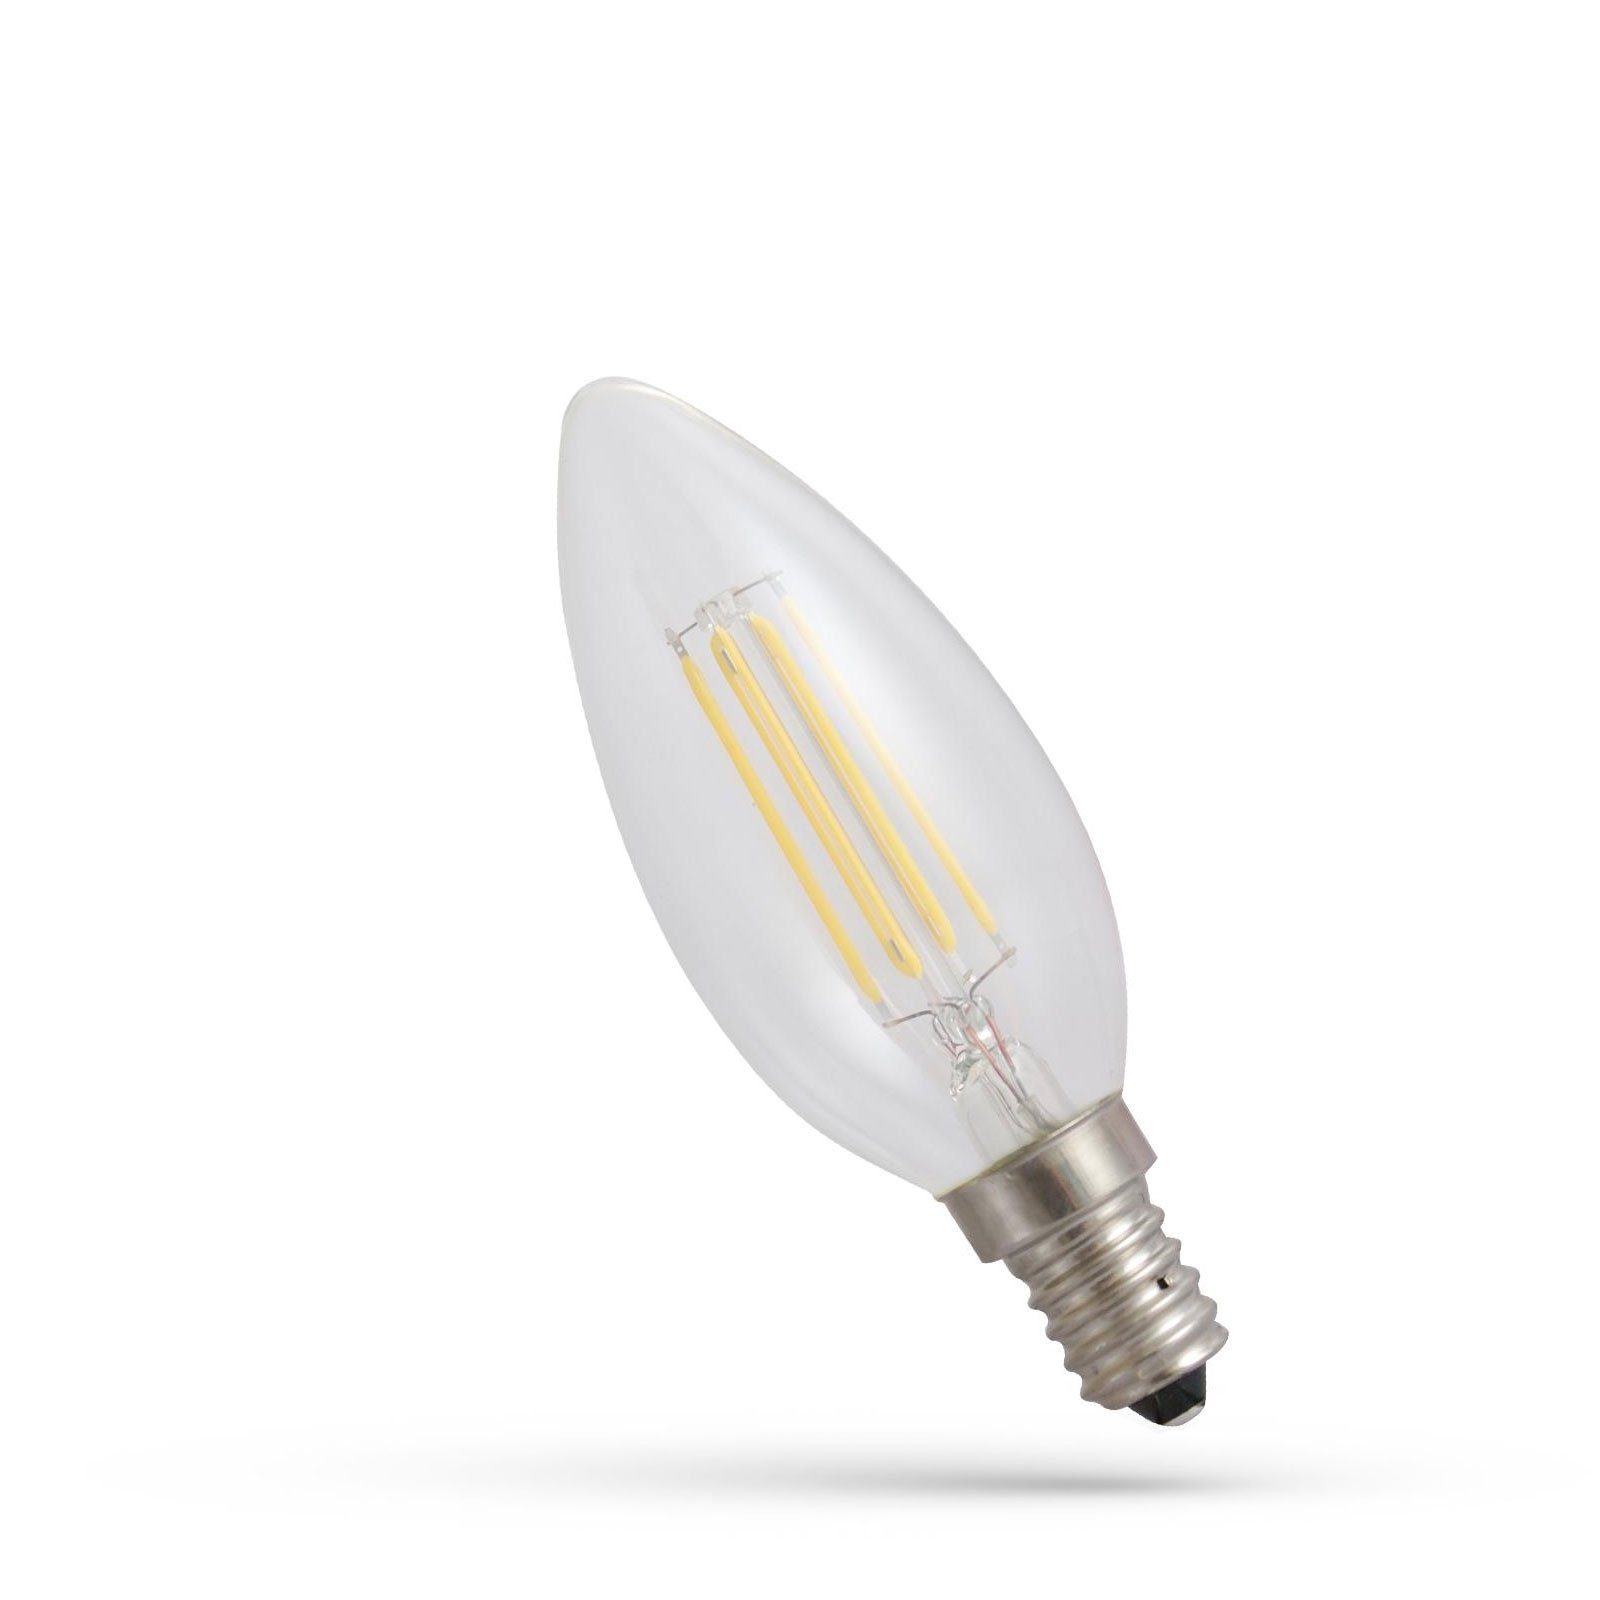 LED-Leuchtmittel C35 = spectrum 800lm E14 E14, Klar Dimmbar, LED DIMMBAR, klar 5,5W Warmweiß, Filament LED 60W SpectrumLED Filament 300° Warmweiß 2700K